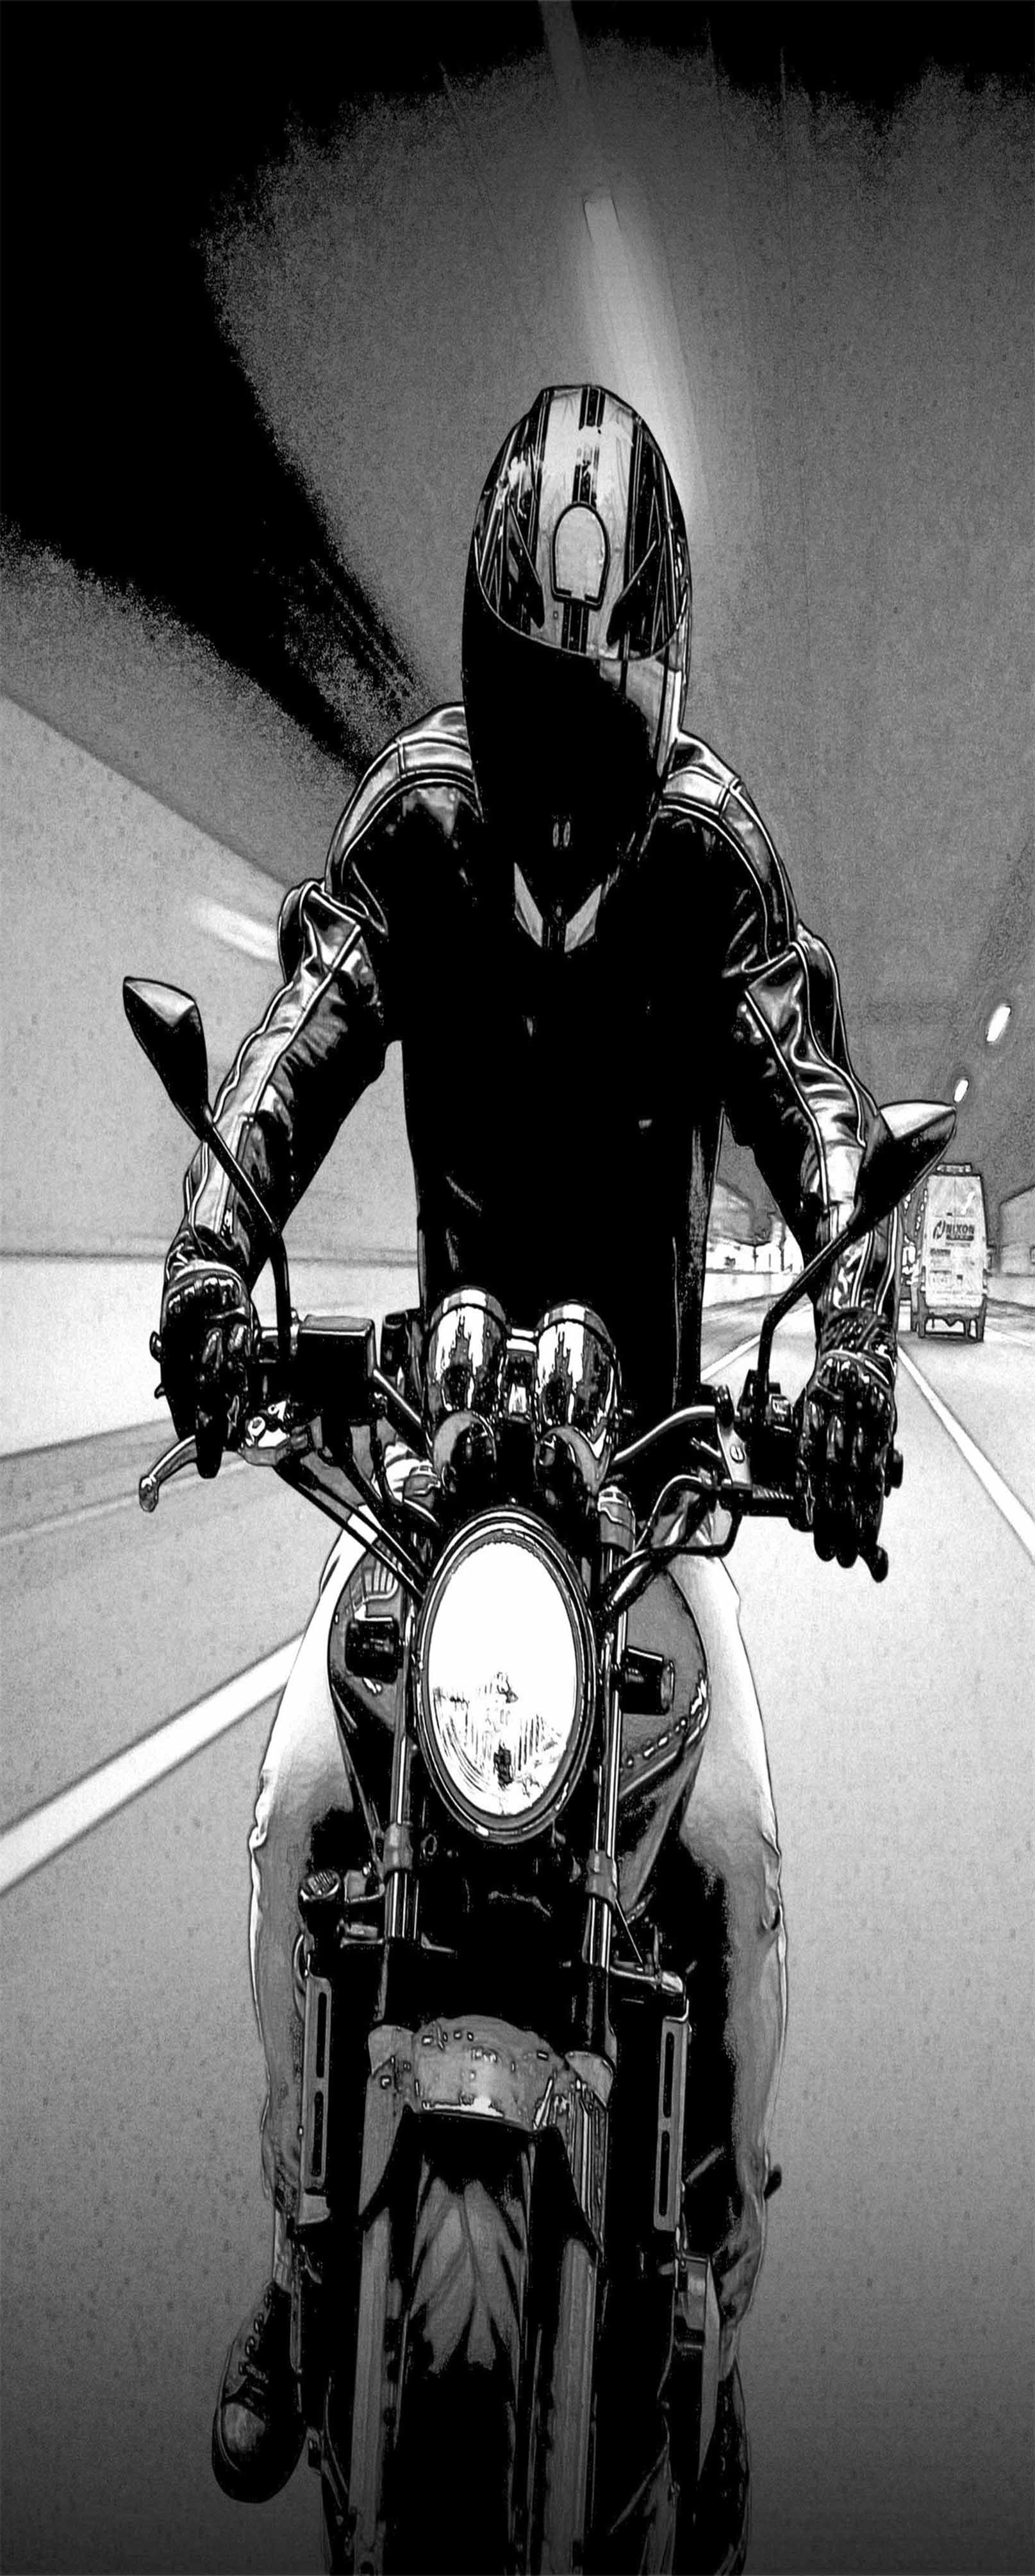 3D Motorcycle Rider 1152 Stair Risers Wallpaper AJ Wallpaper 